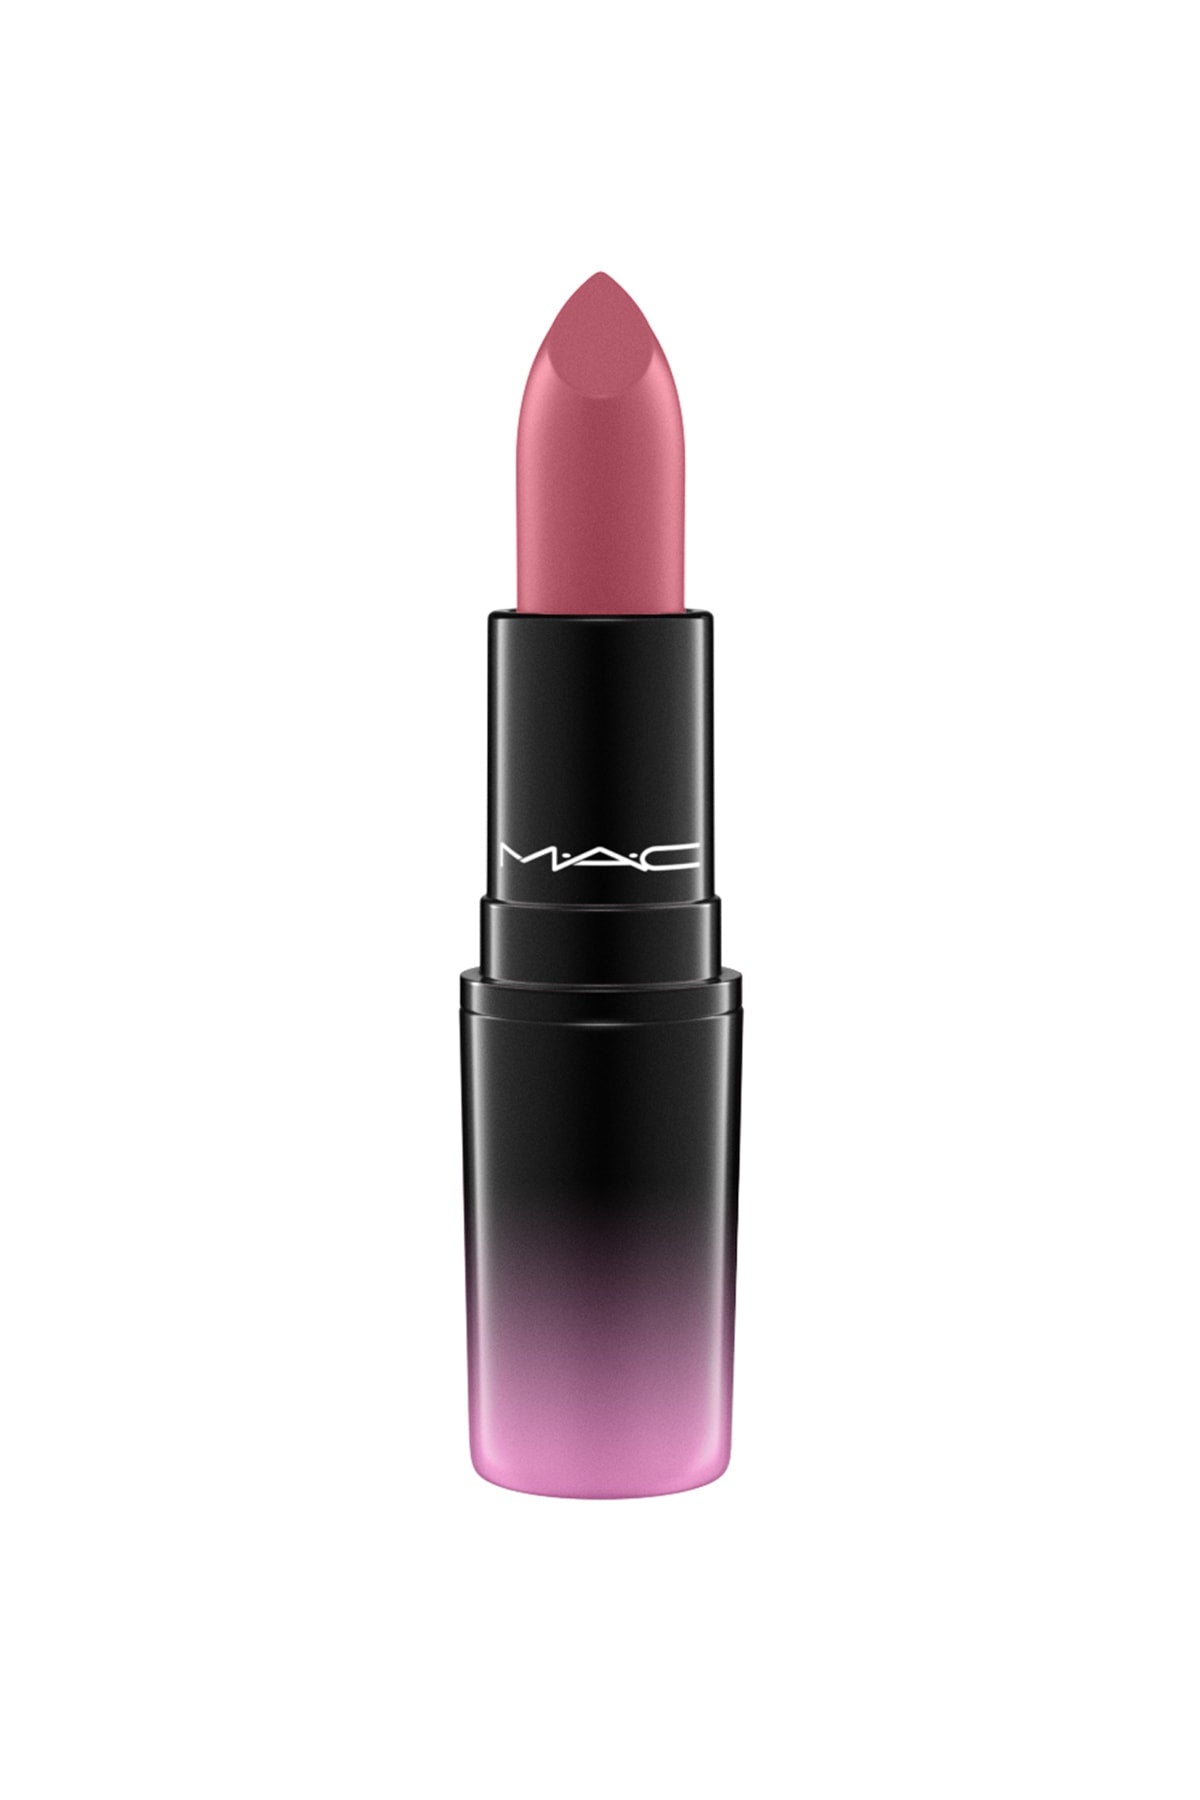 MAC Love Me lipstick מאק שפתון לאב מי - GLAM42